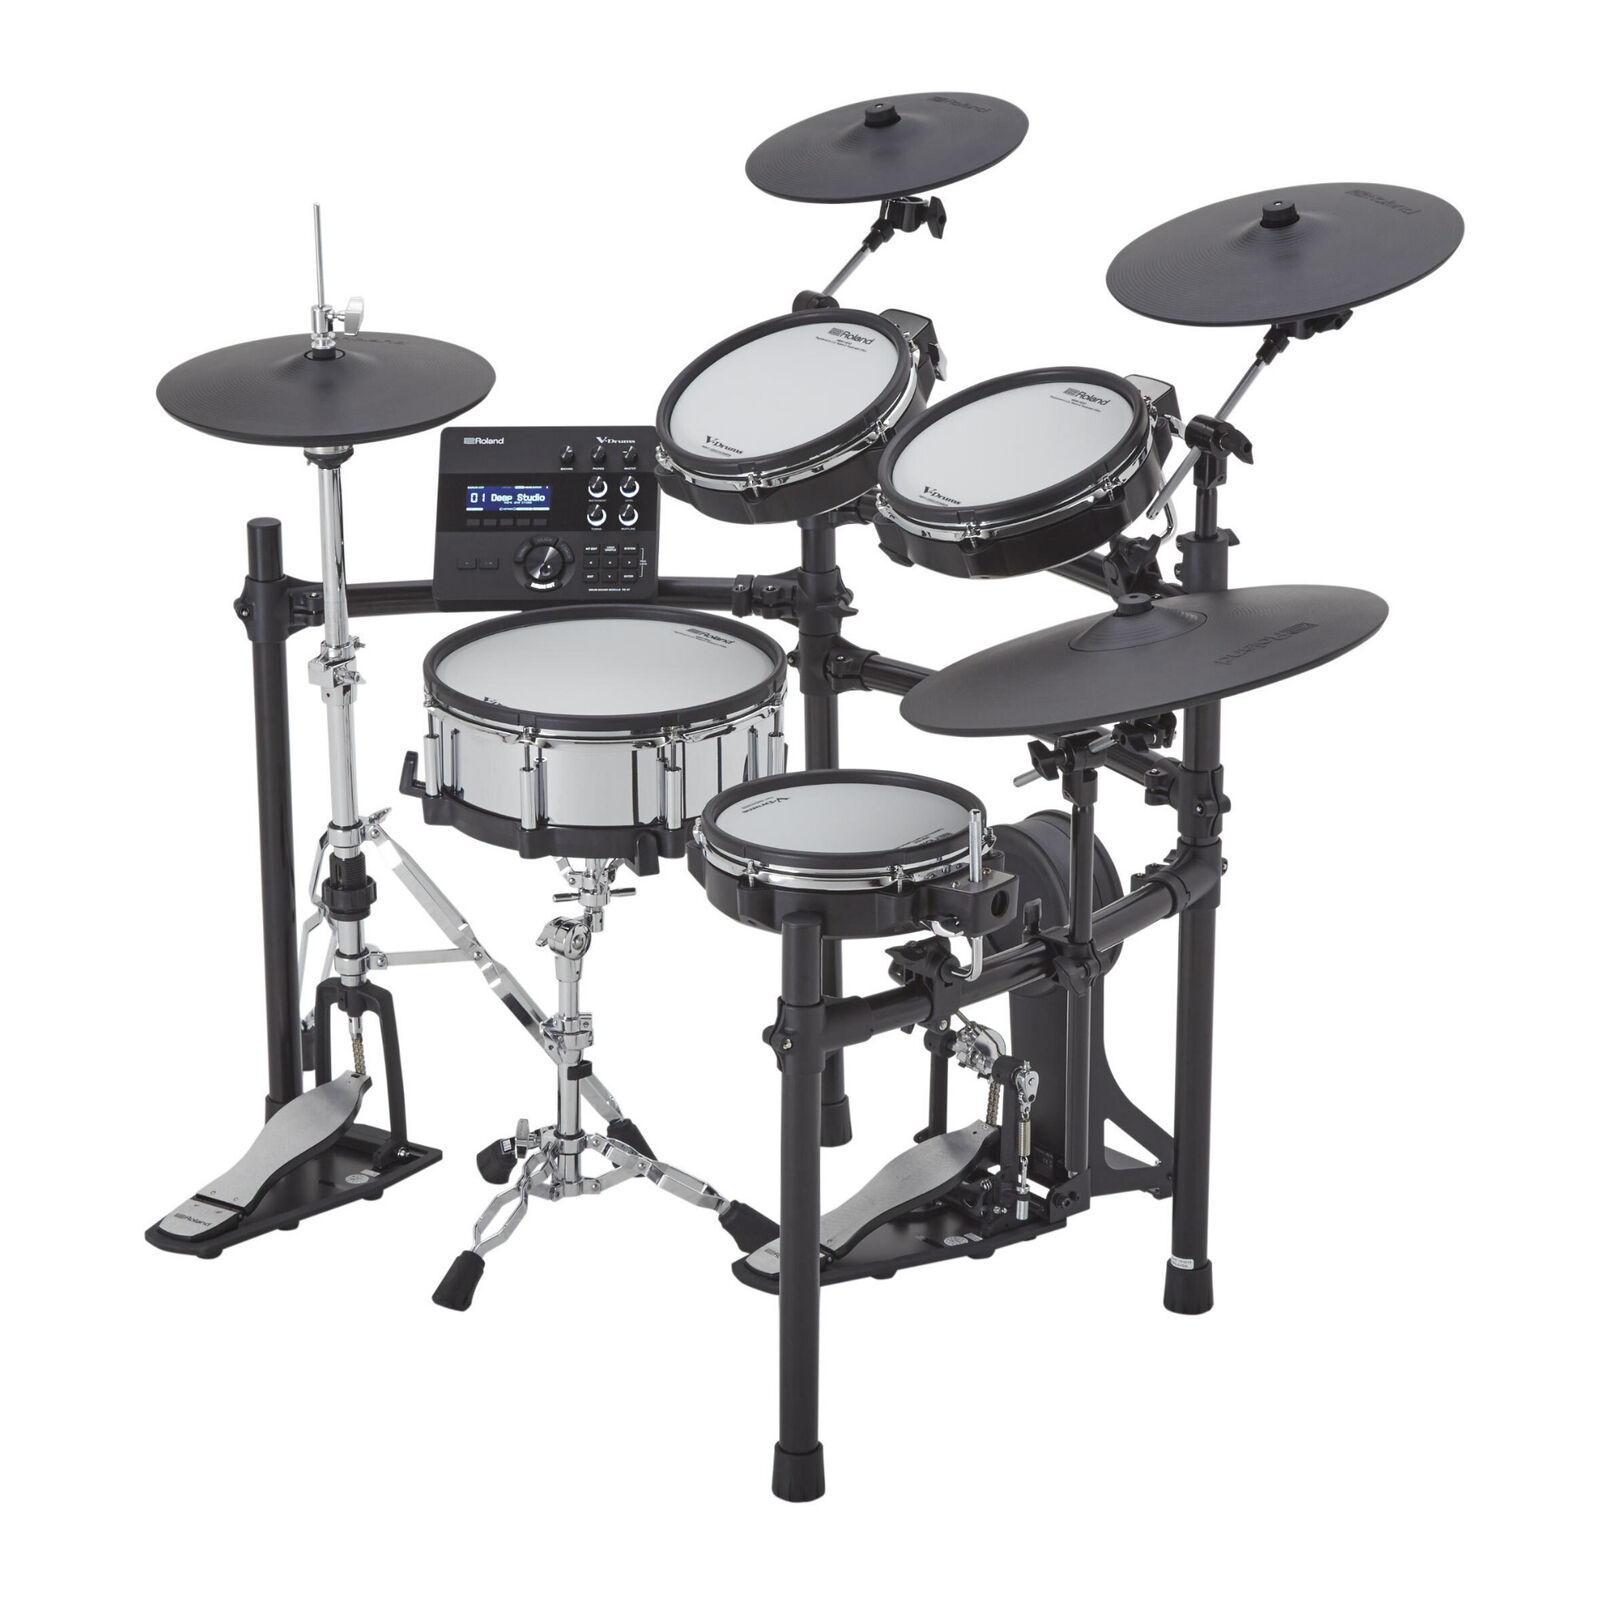 Roland TD-27KV2 Generation 2 V-Drum Electronic Drum Kit with 75 Presets 2